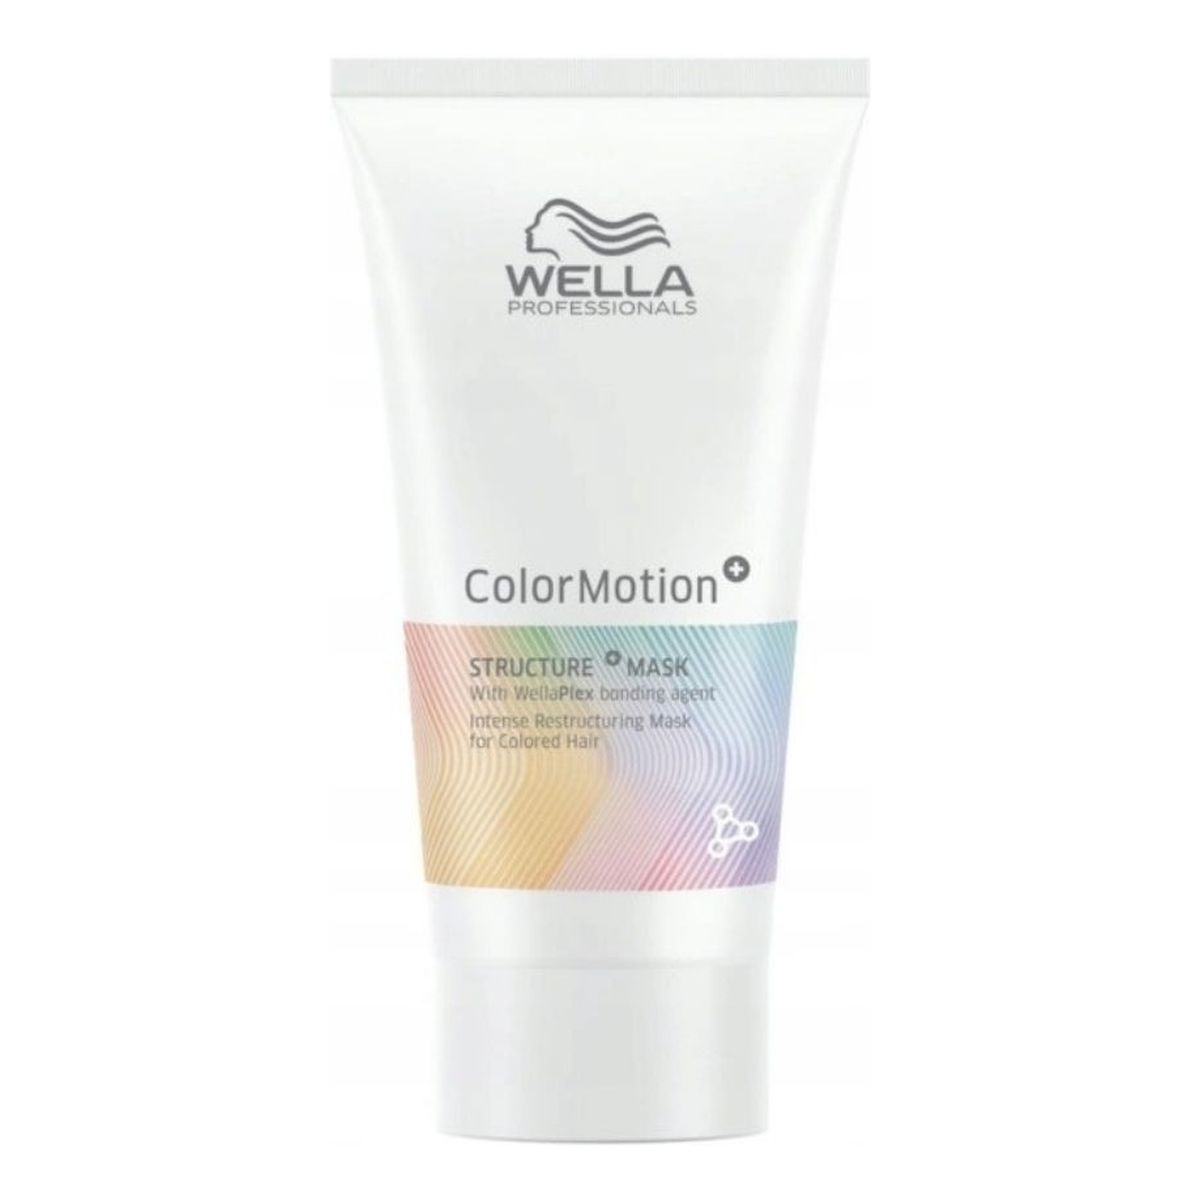 Wella Professionals ColorMotion+ Structure+ Mask maska chroniąca kolor włosów 30ml